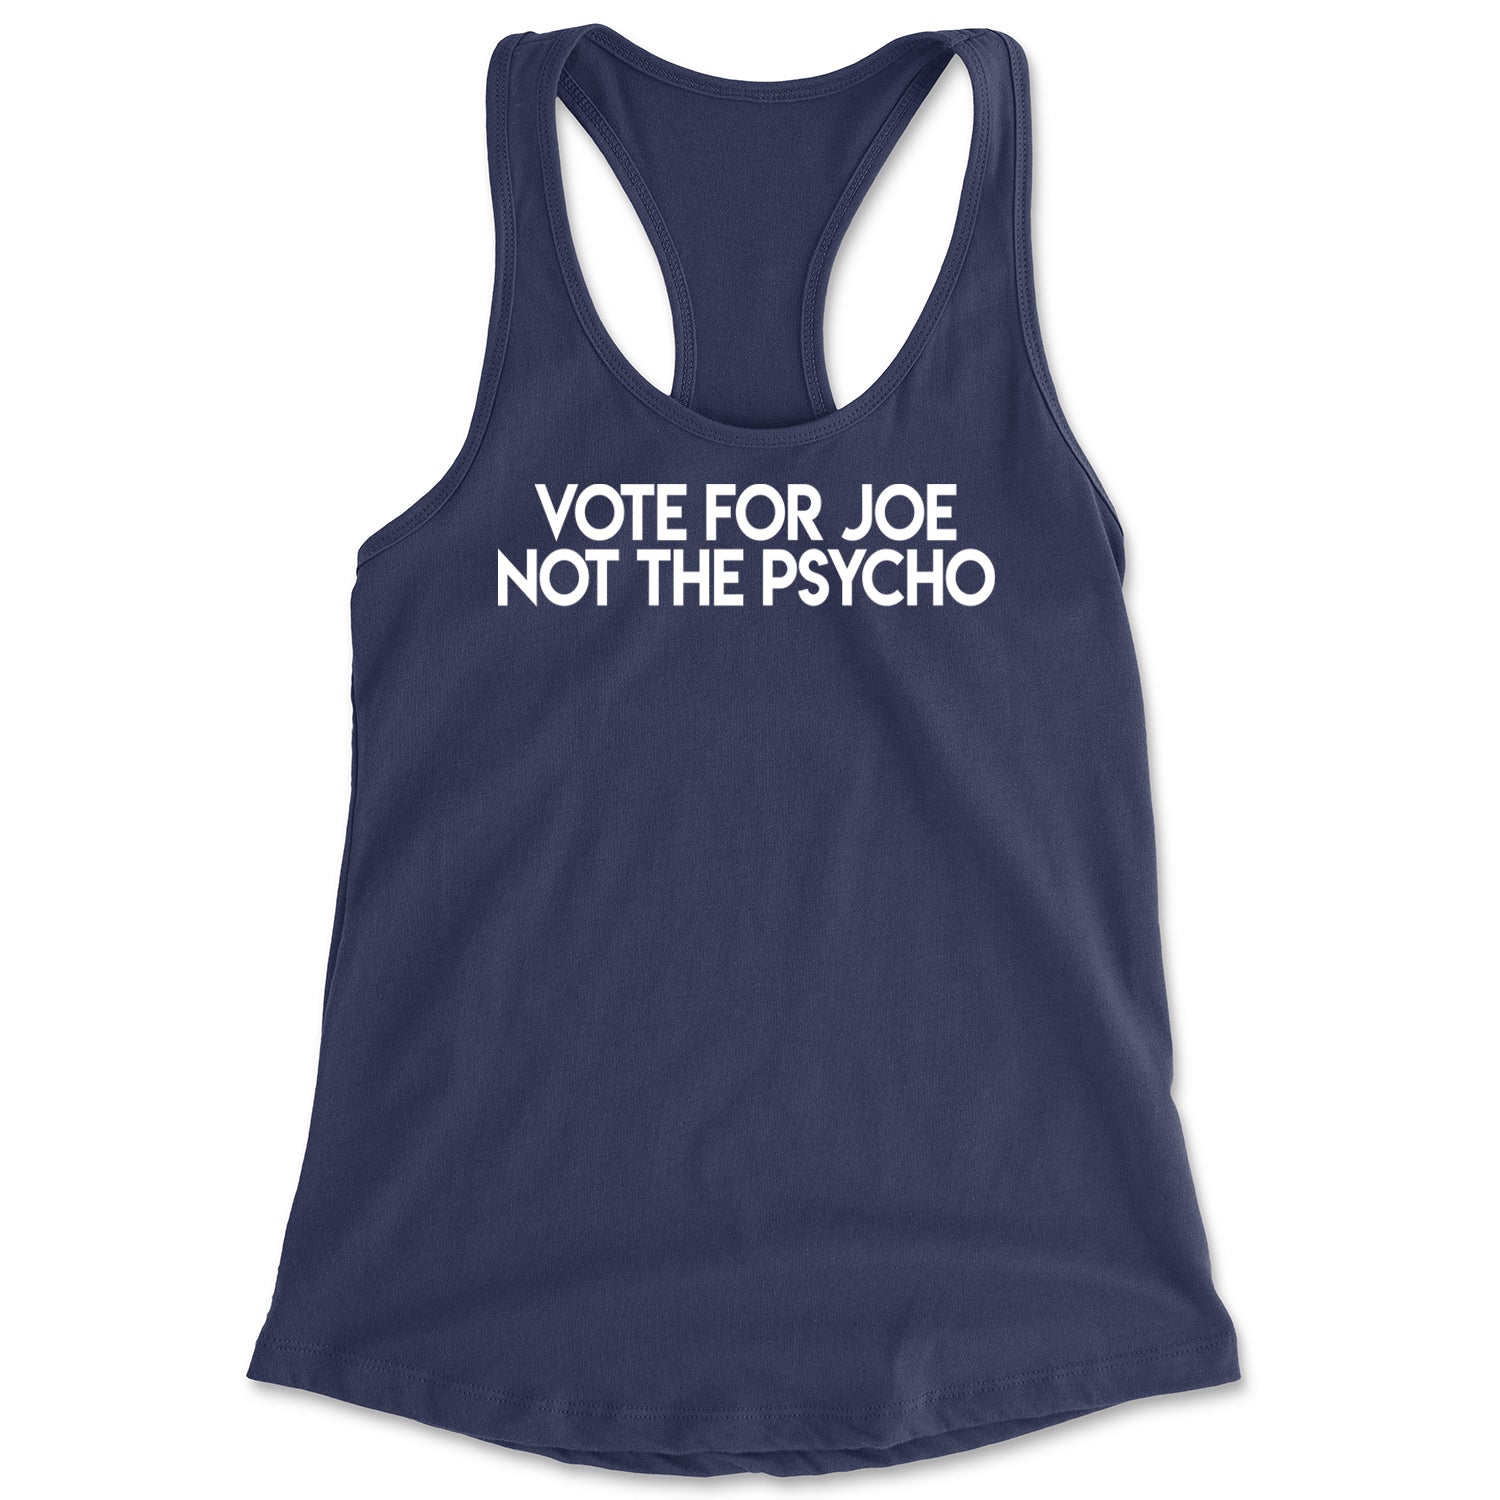 Vote For Joe Not The Psycho Racerback Tank Top for Women